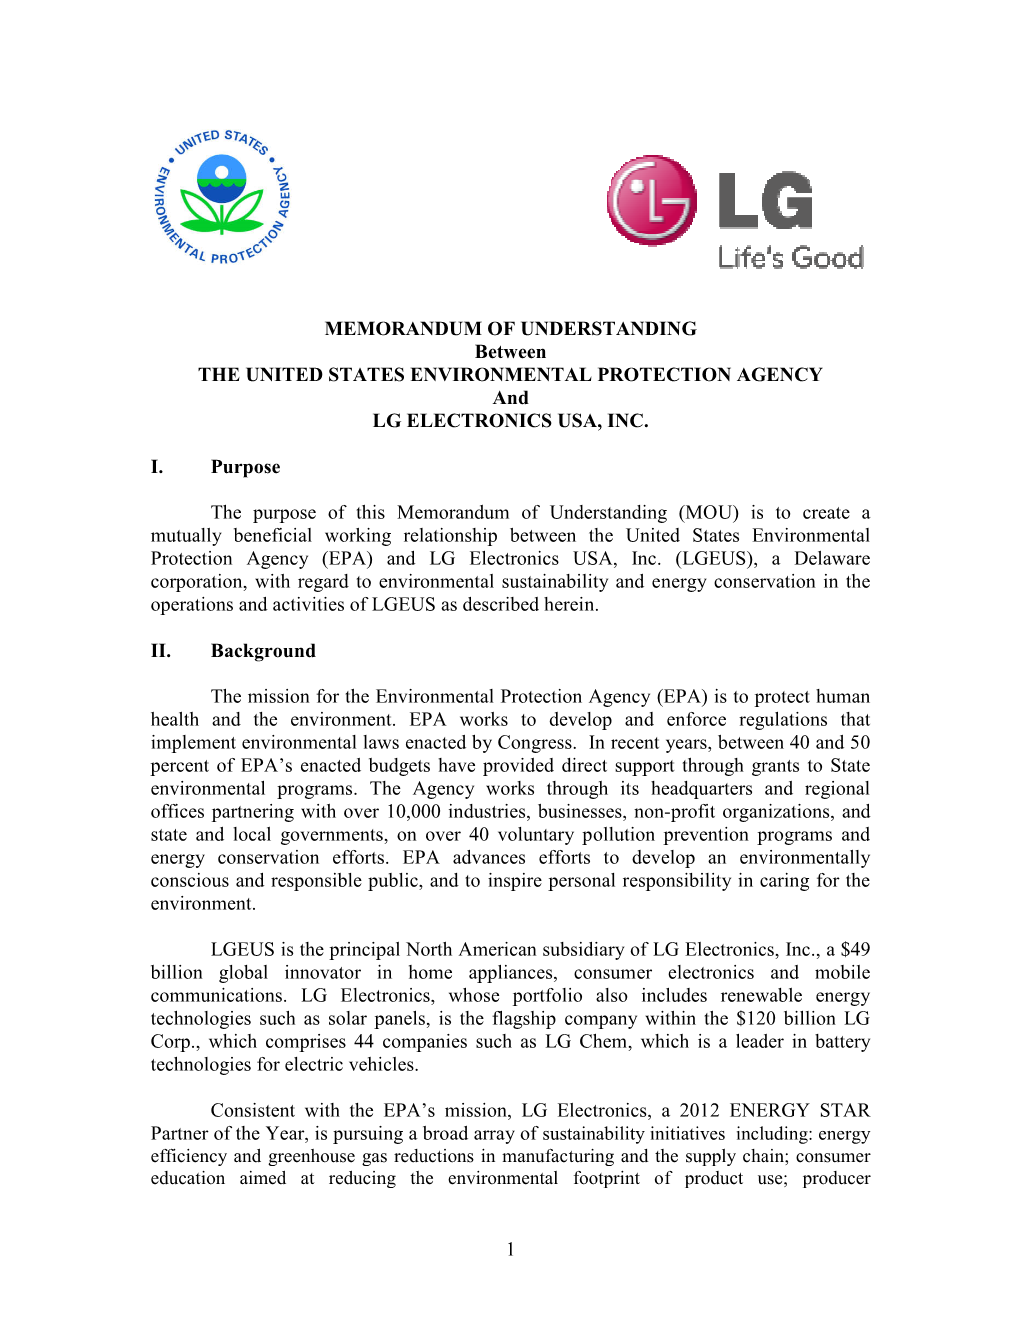 LG Electronics USA, Inc. Memorandum of Understanding